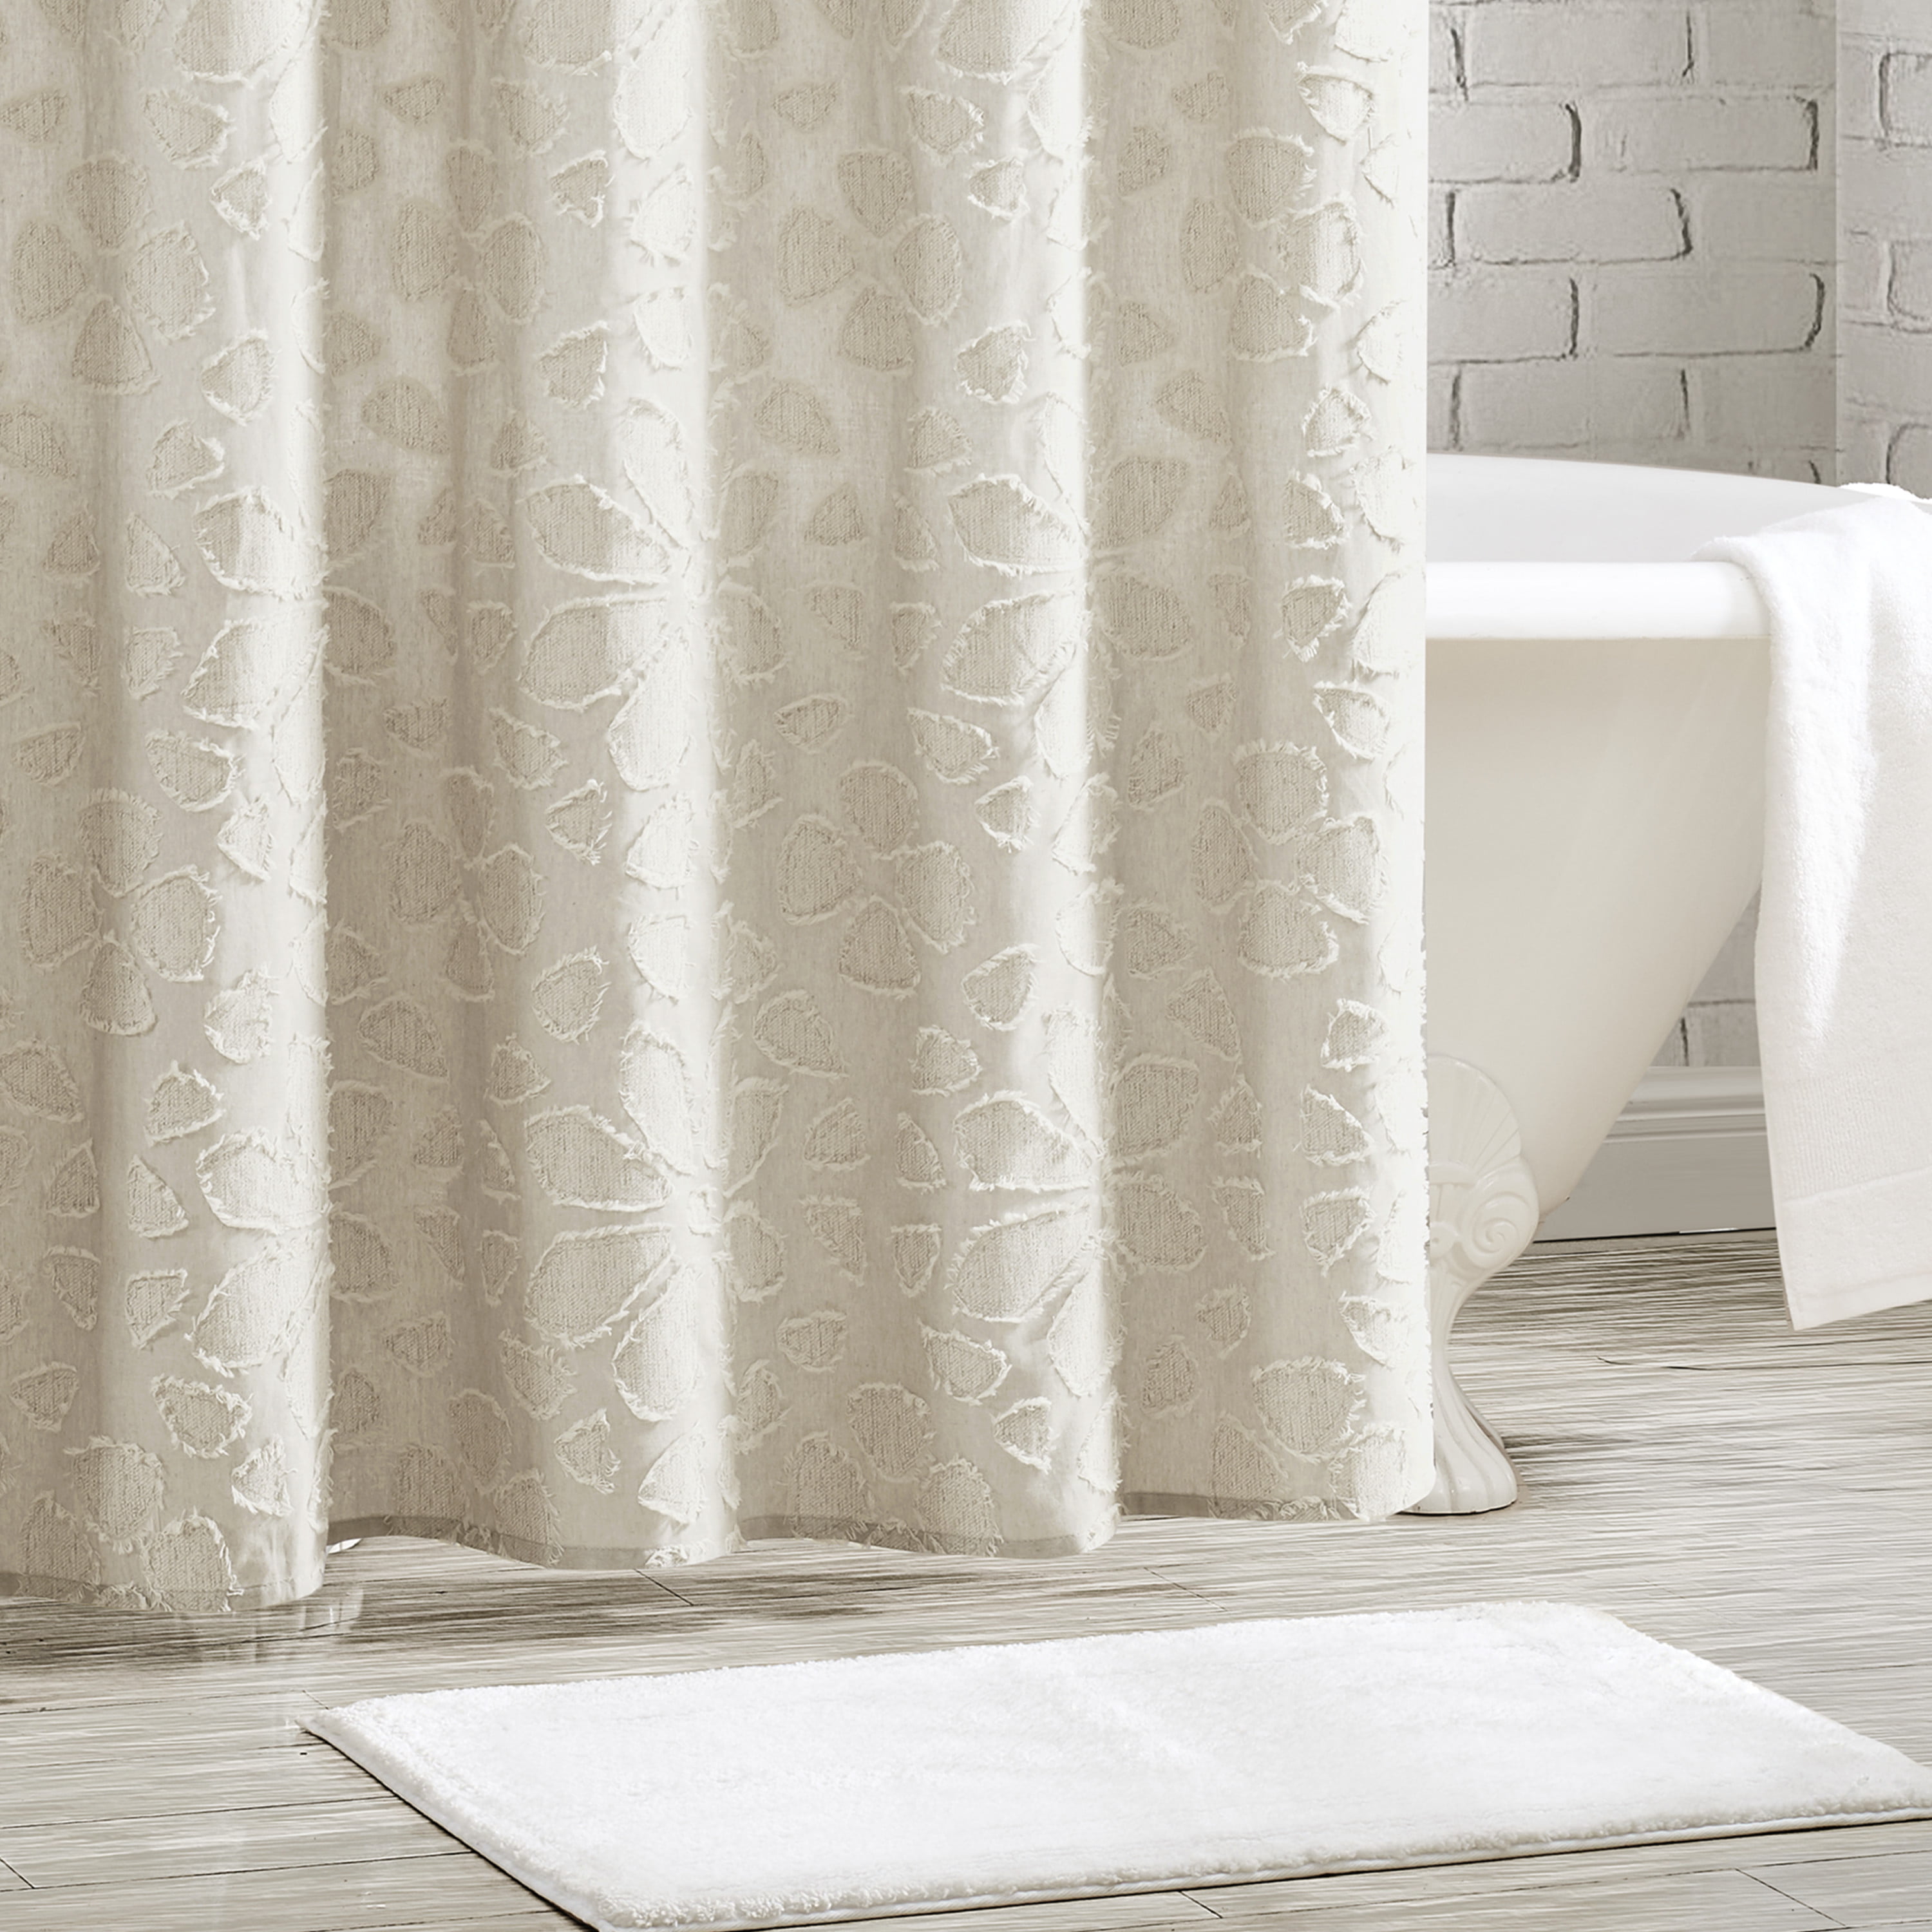 Peri Home Fabric Shower Curtain 72x72 Bathroom  Shower Curtain NEW 